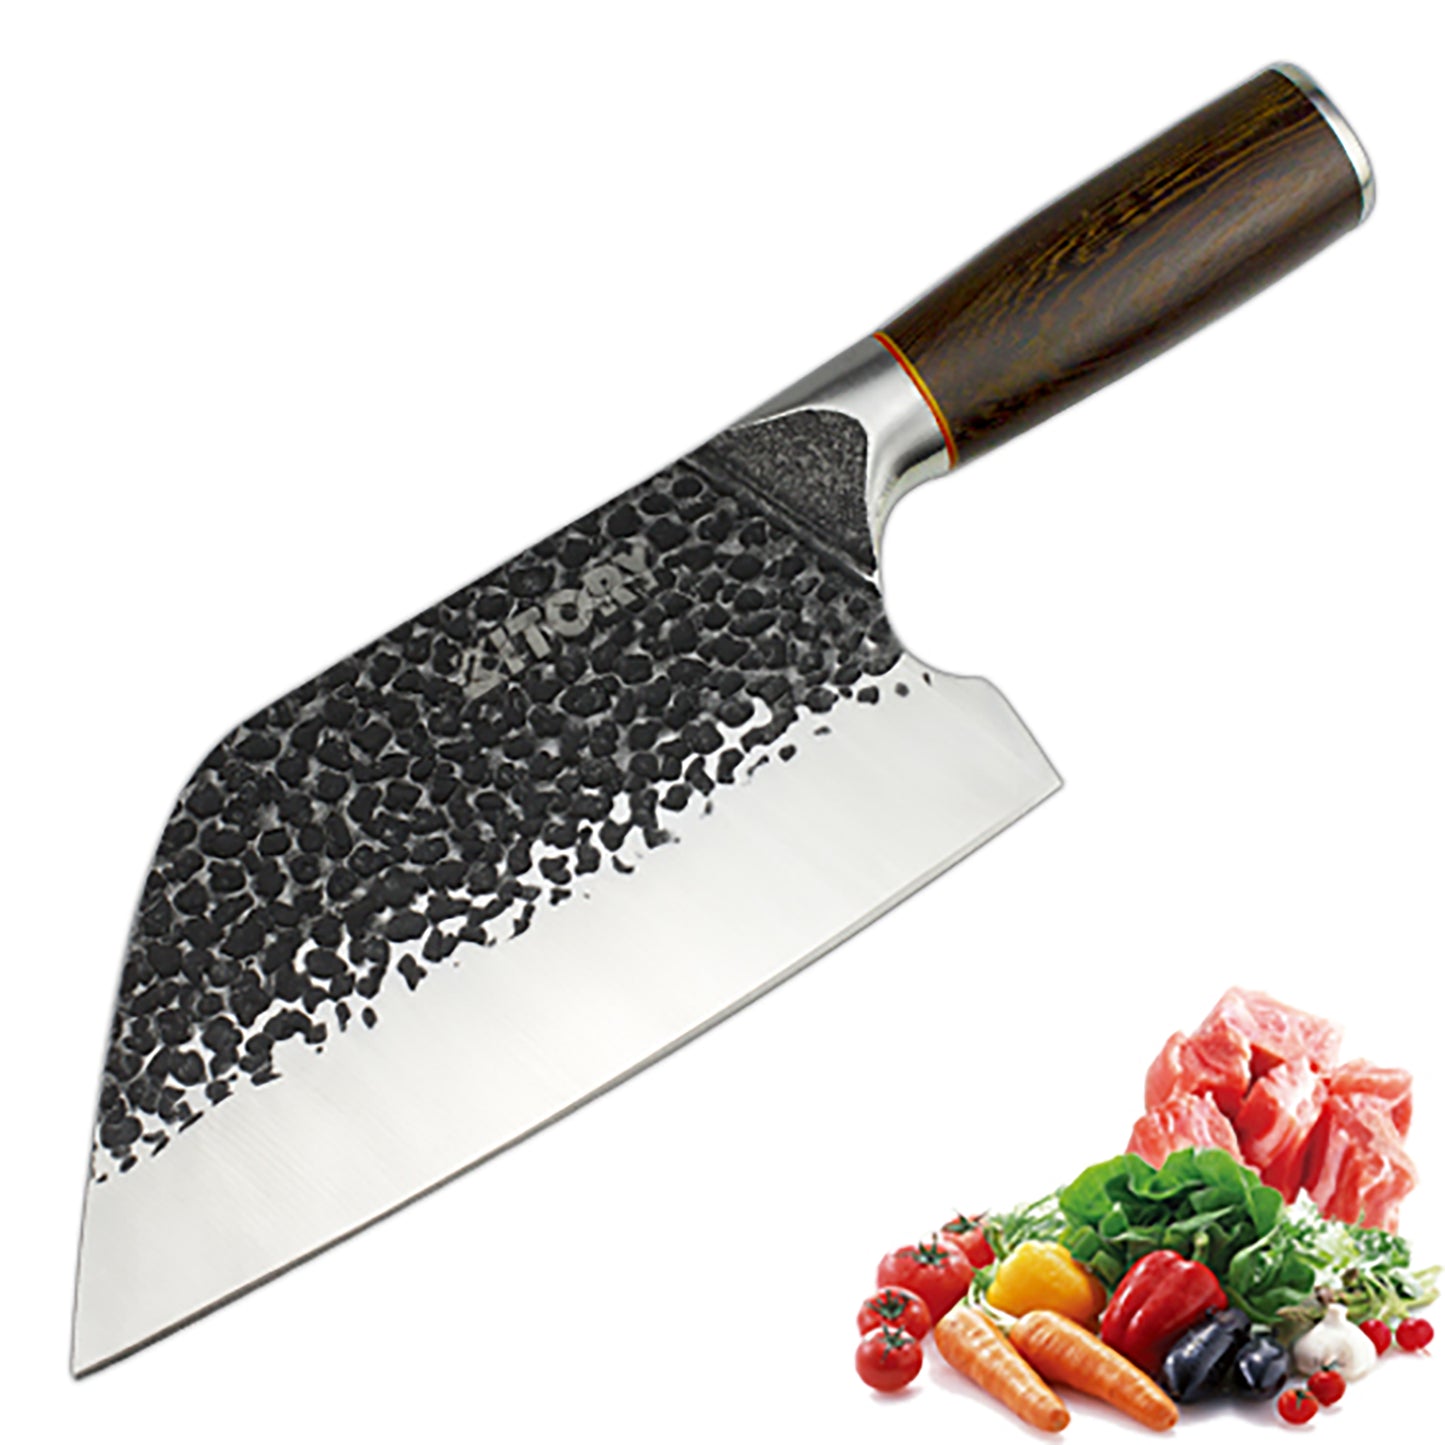 Kitory Serbian Knife High Carbon Steel Wengewood Handle